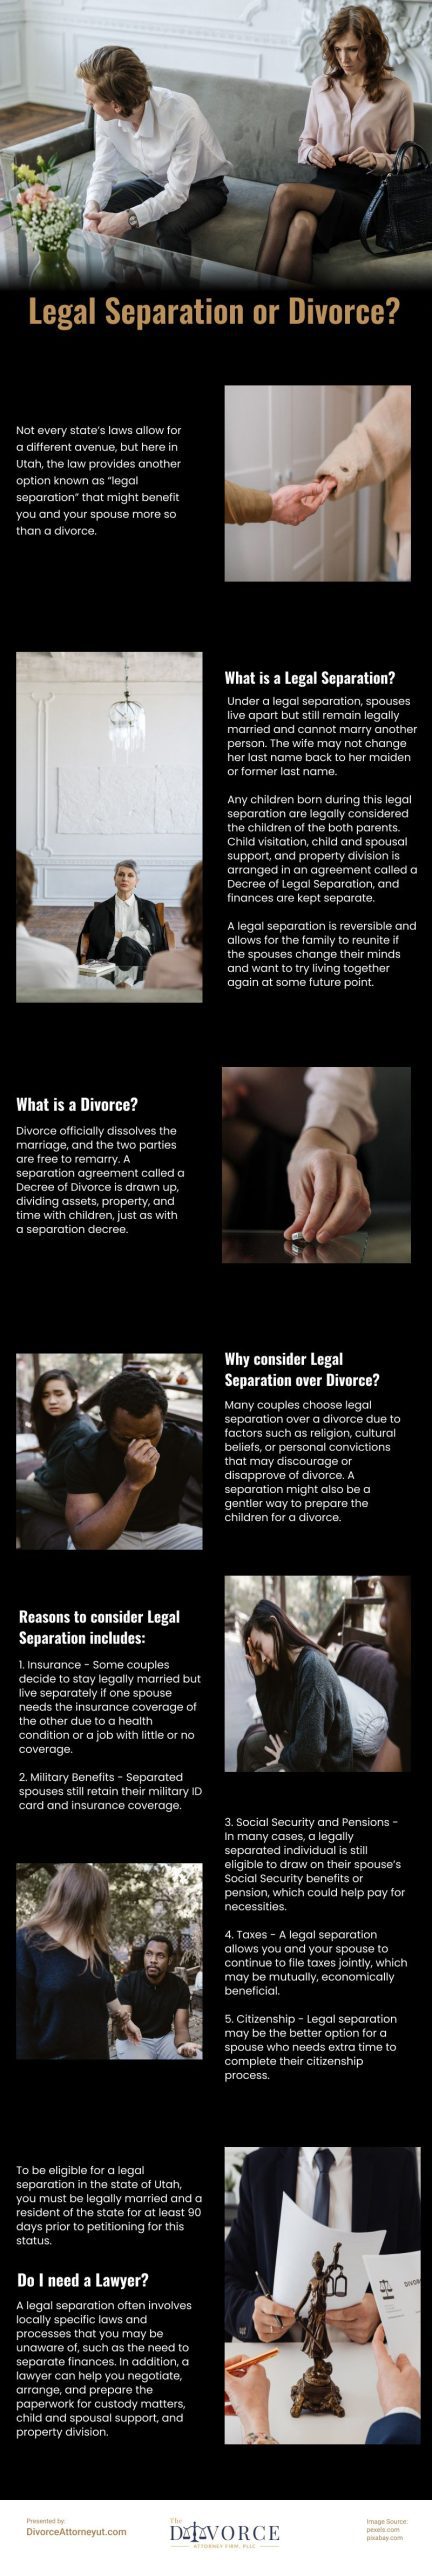 Legal Separation or Divorce Infographic